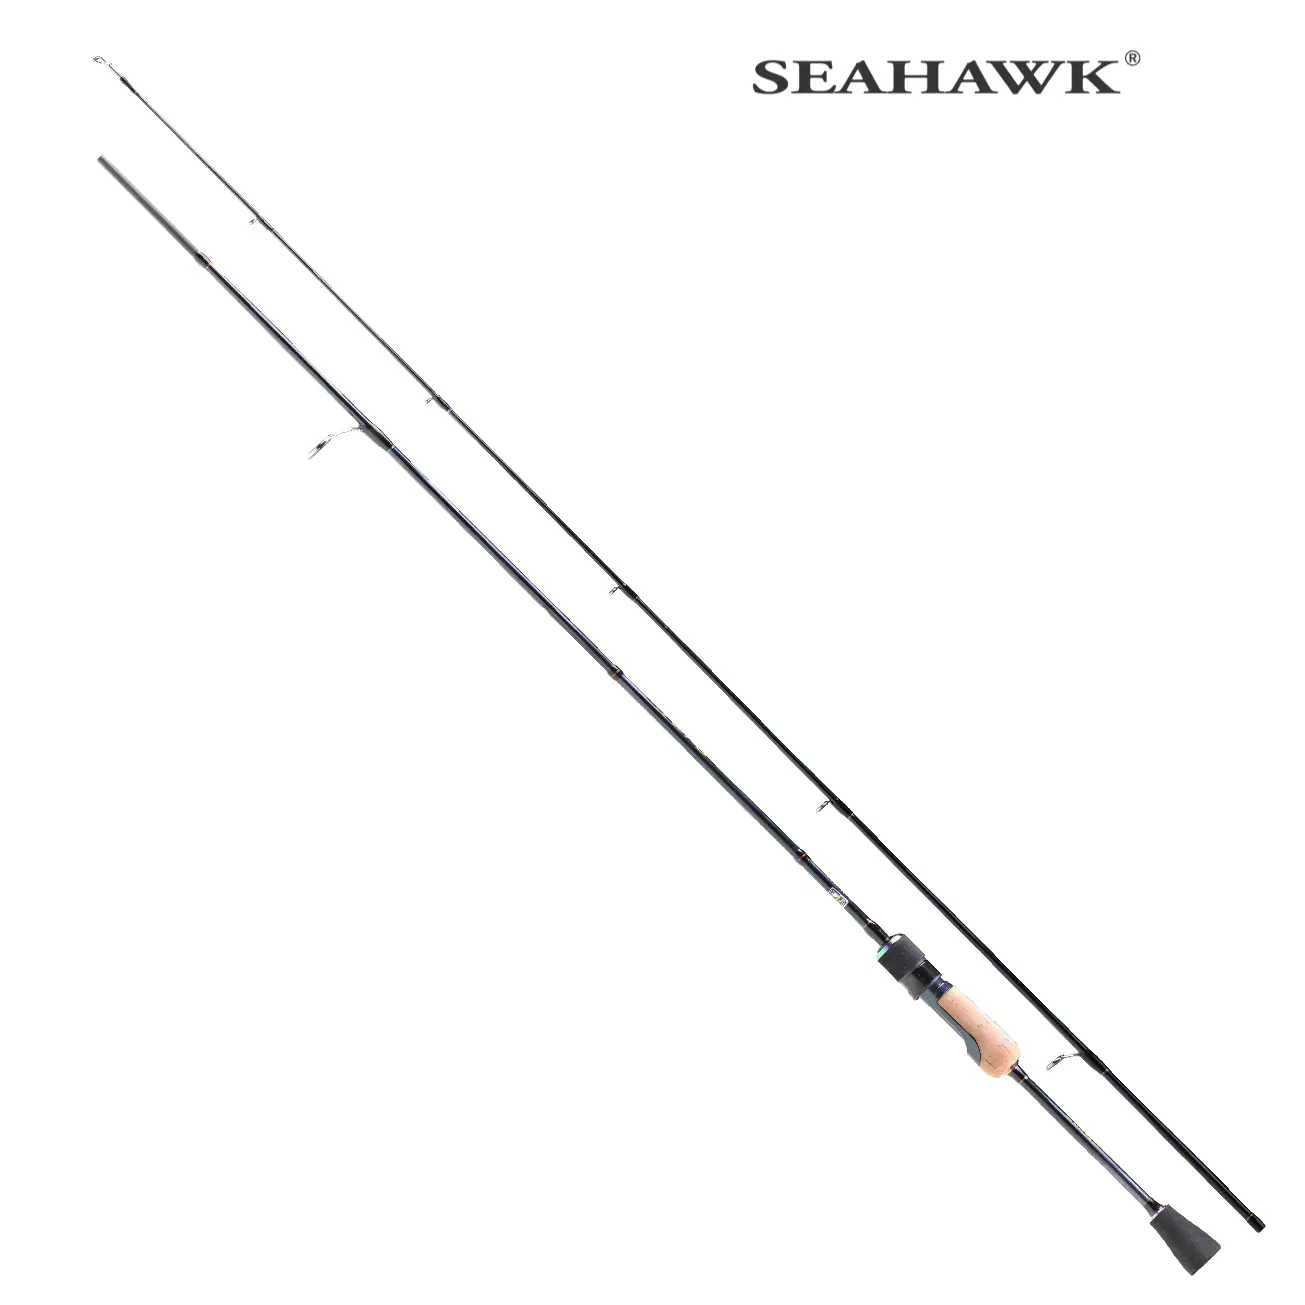 https://seahawkfishing.com/wp-content/uploads/2020/10/Seahawk-Flexis-Spinning-FLX-LMain.jpg.webp